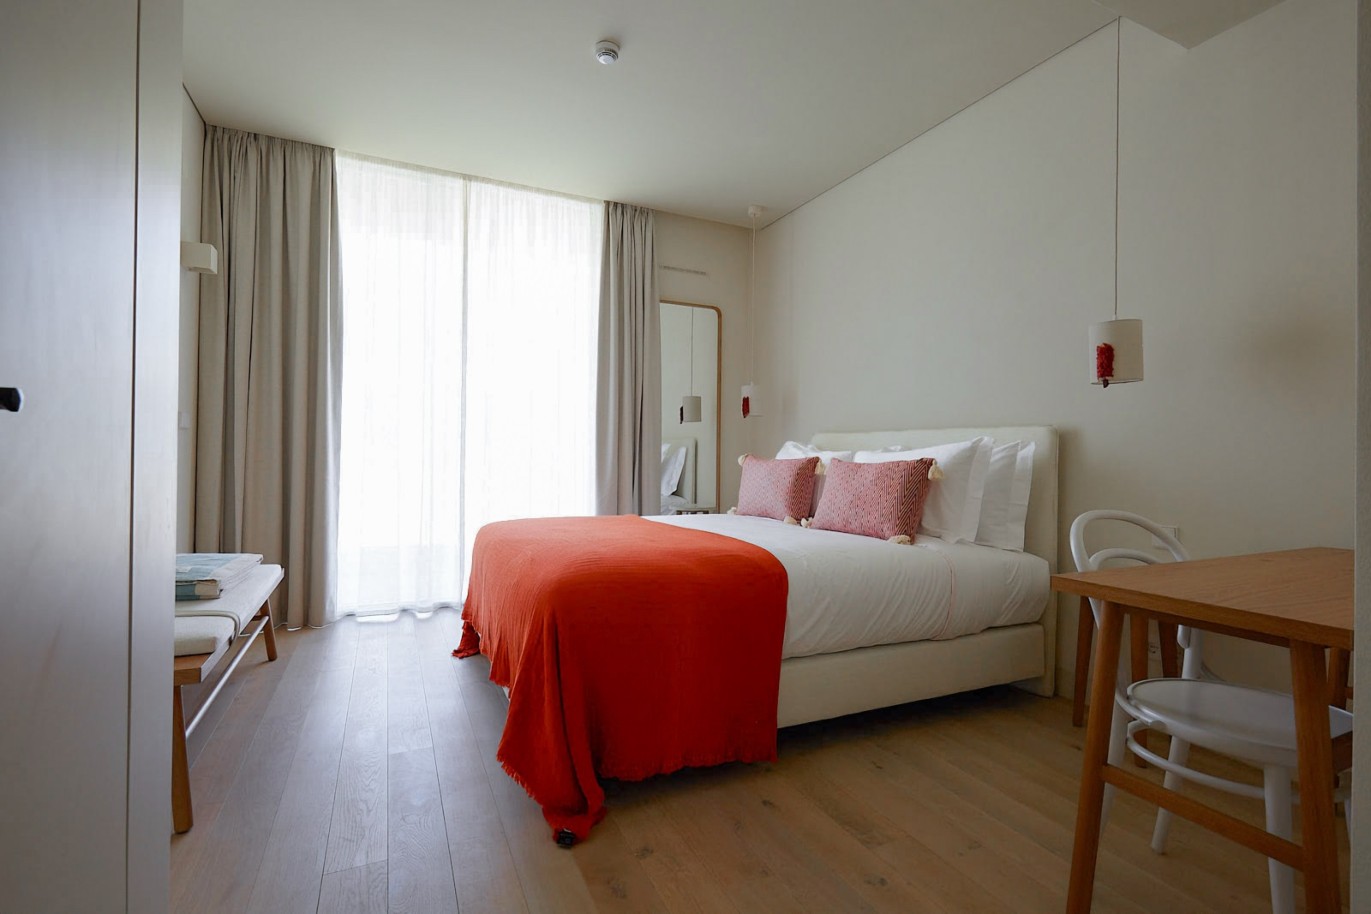 2 bedroom apartment in resort, for sale in Porches, Algarve_229090